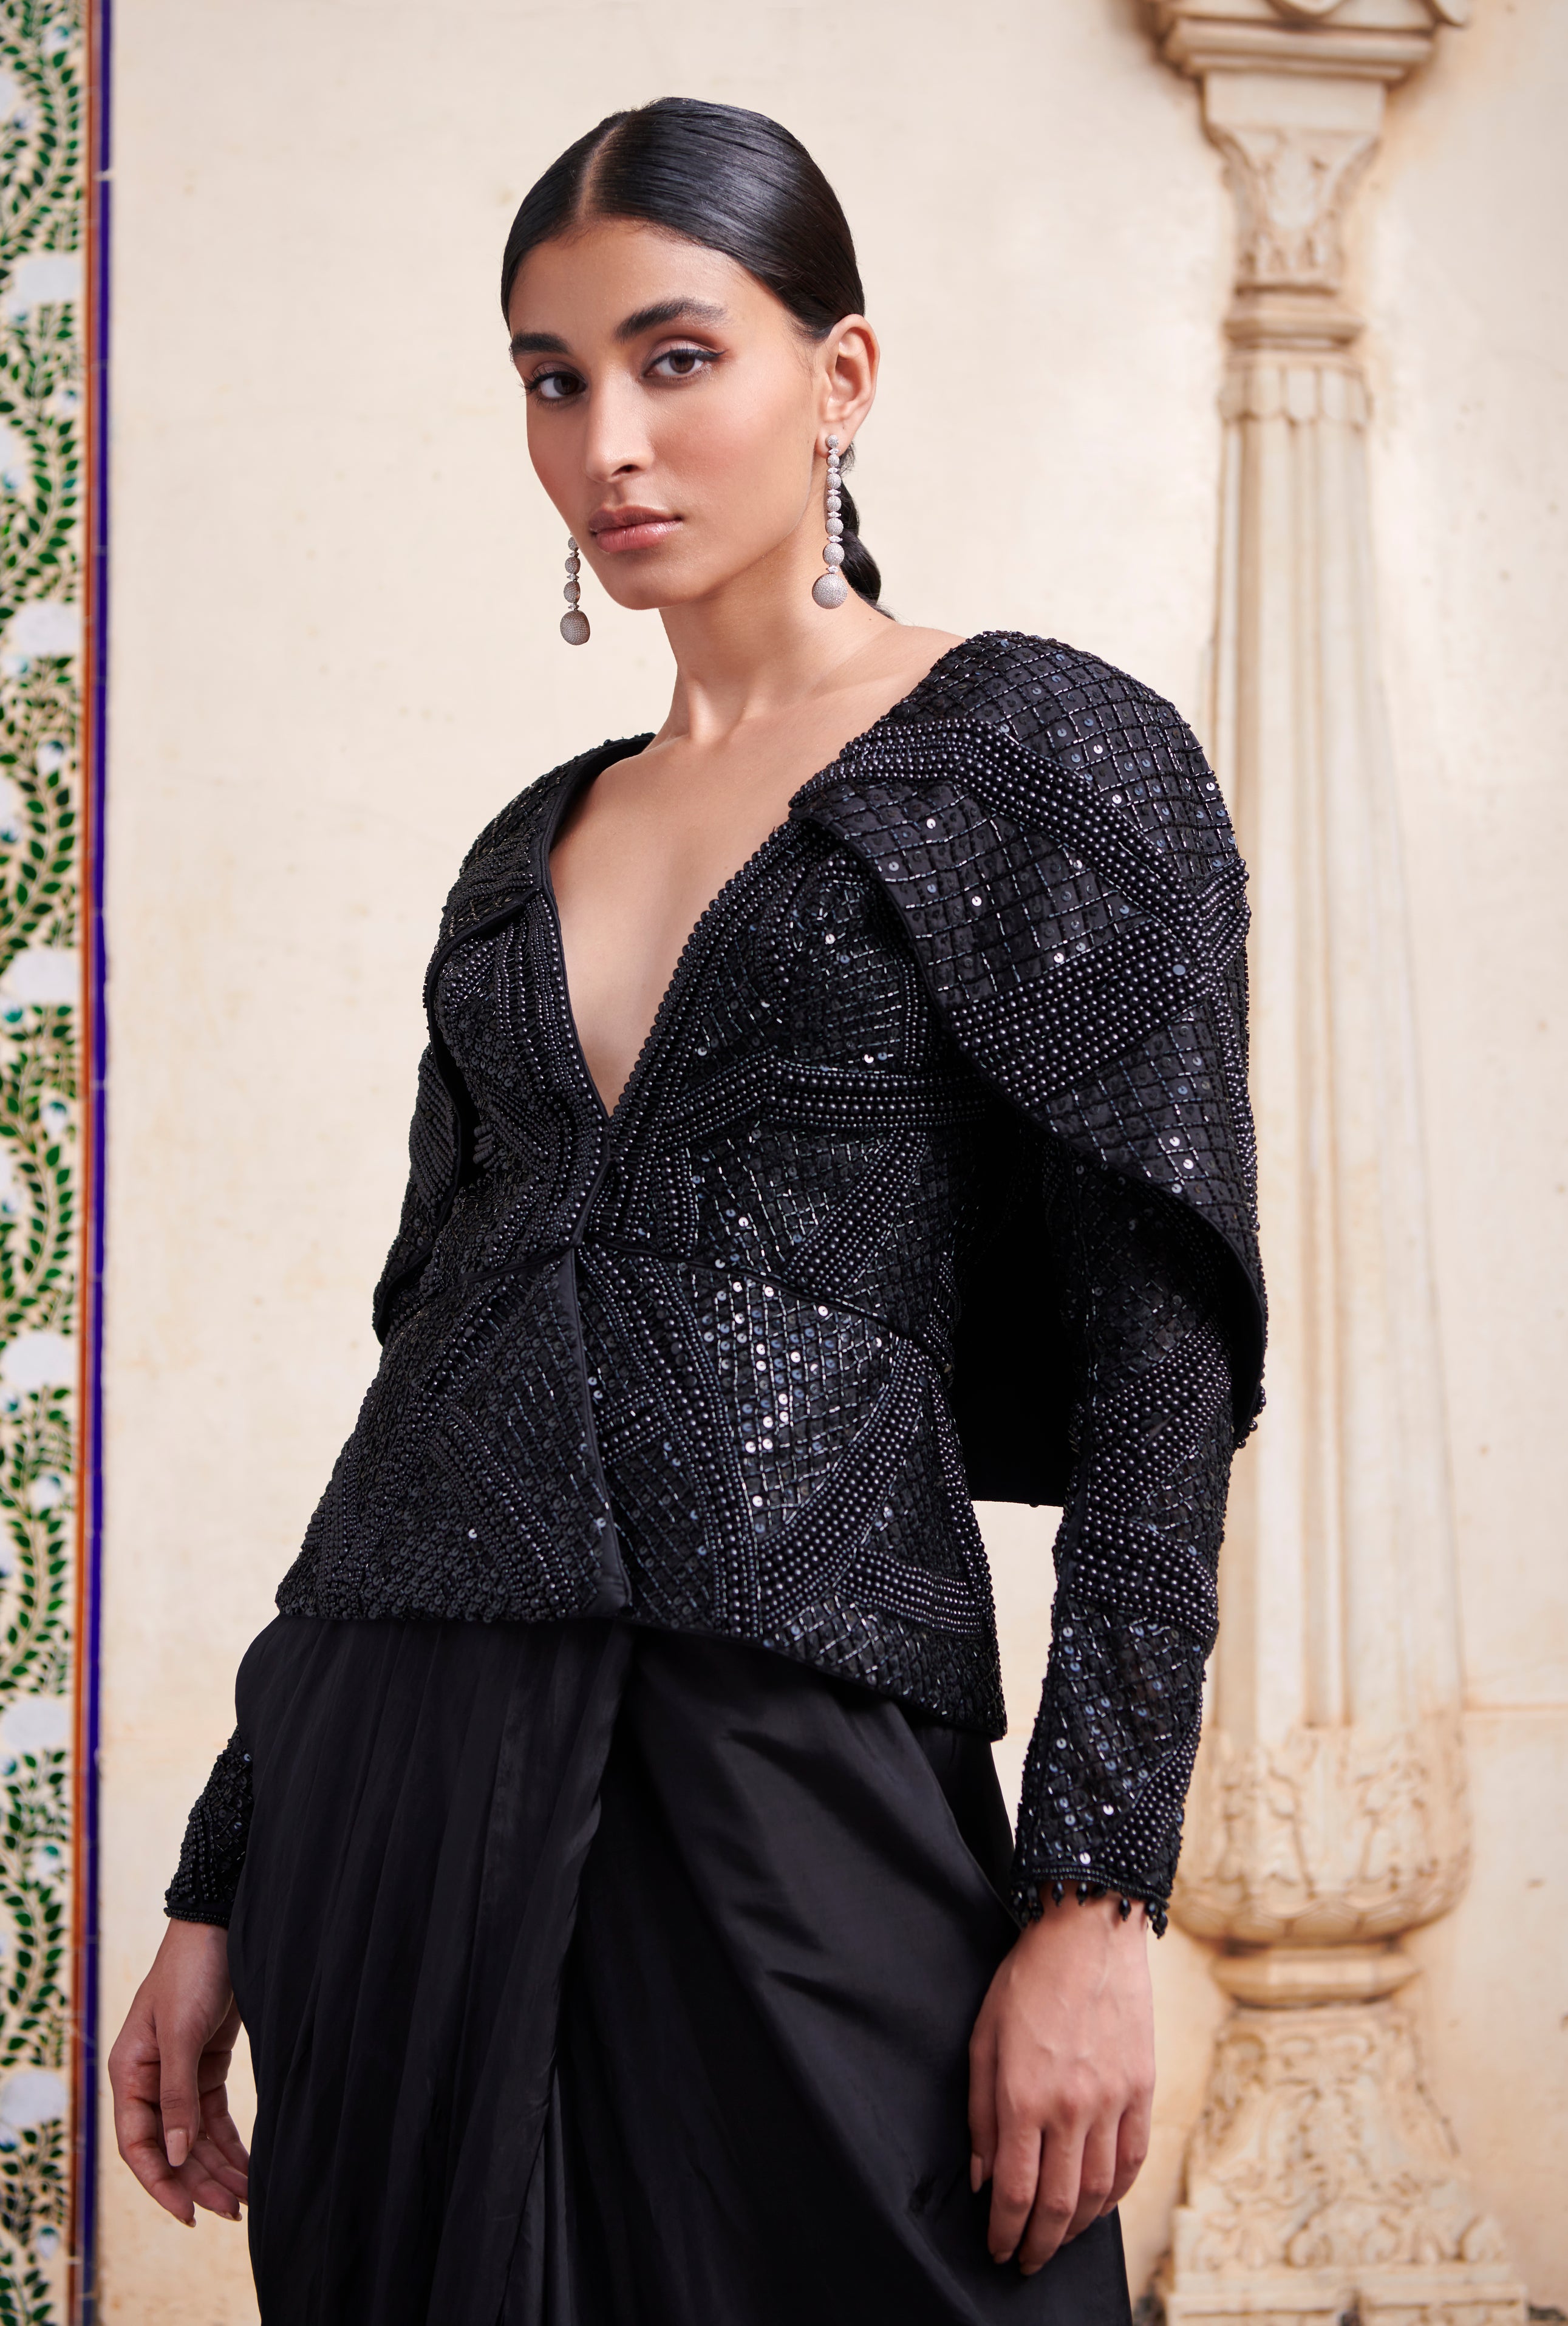 Sleek sophistication: Customize your style with this Linen Satin Lehenga and Habutai Silk Blouse combo.